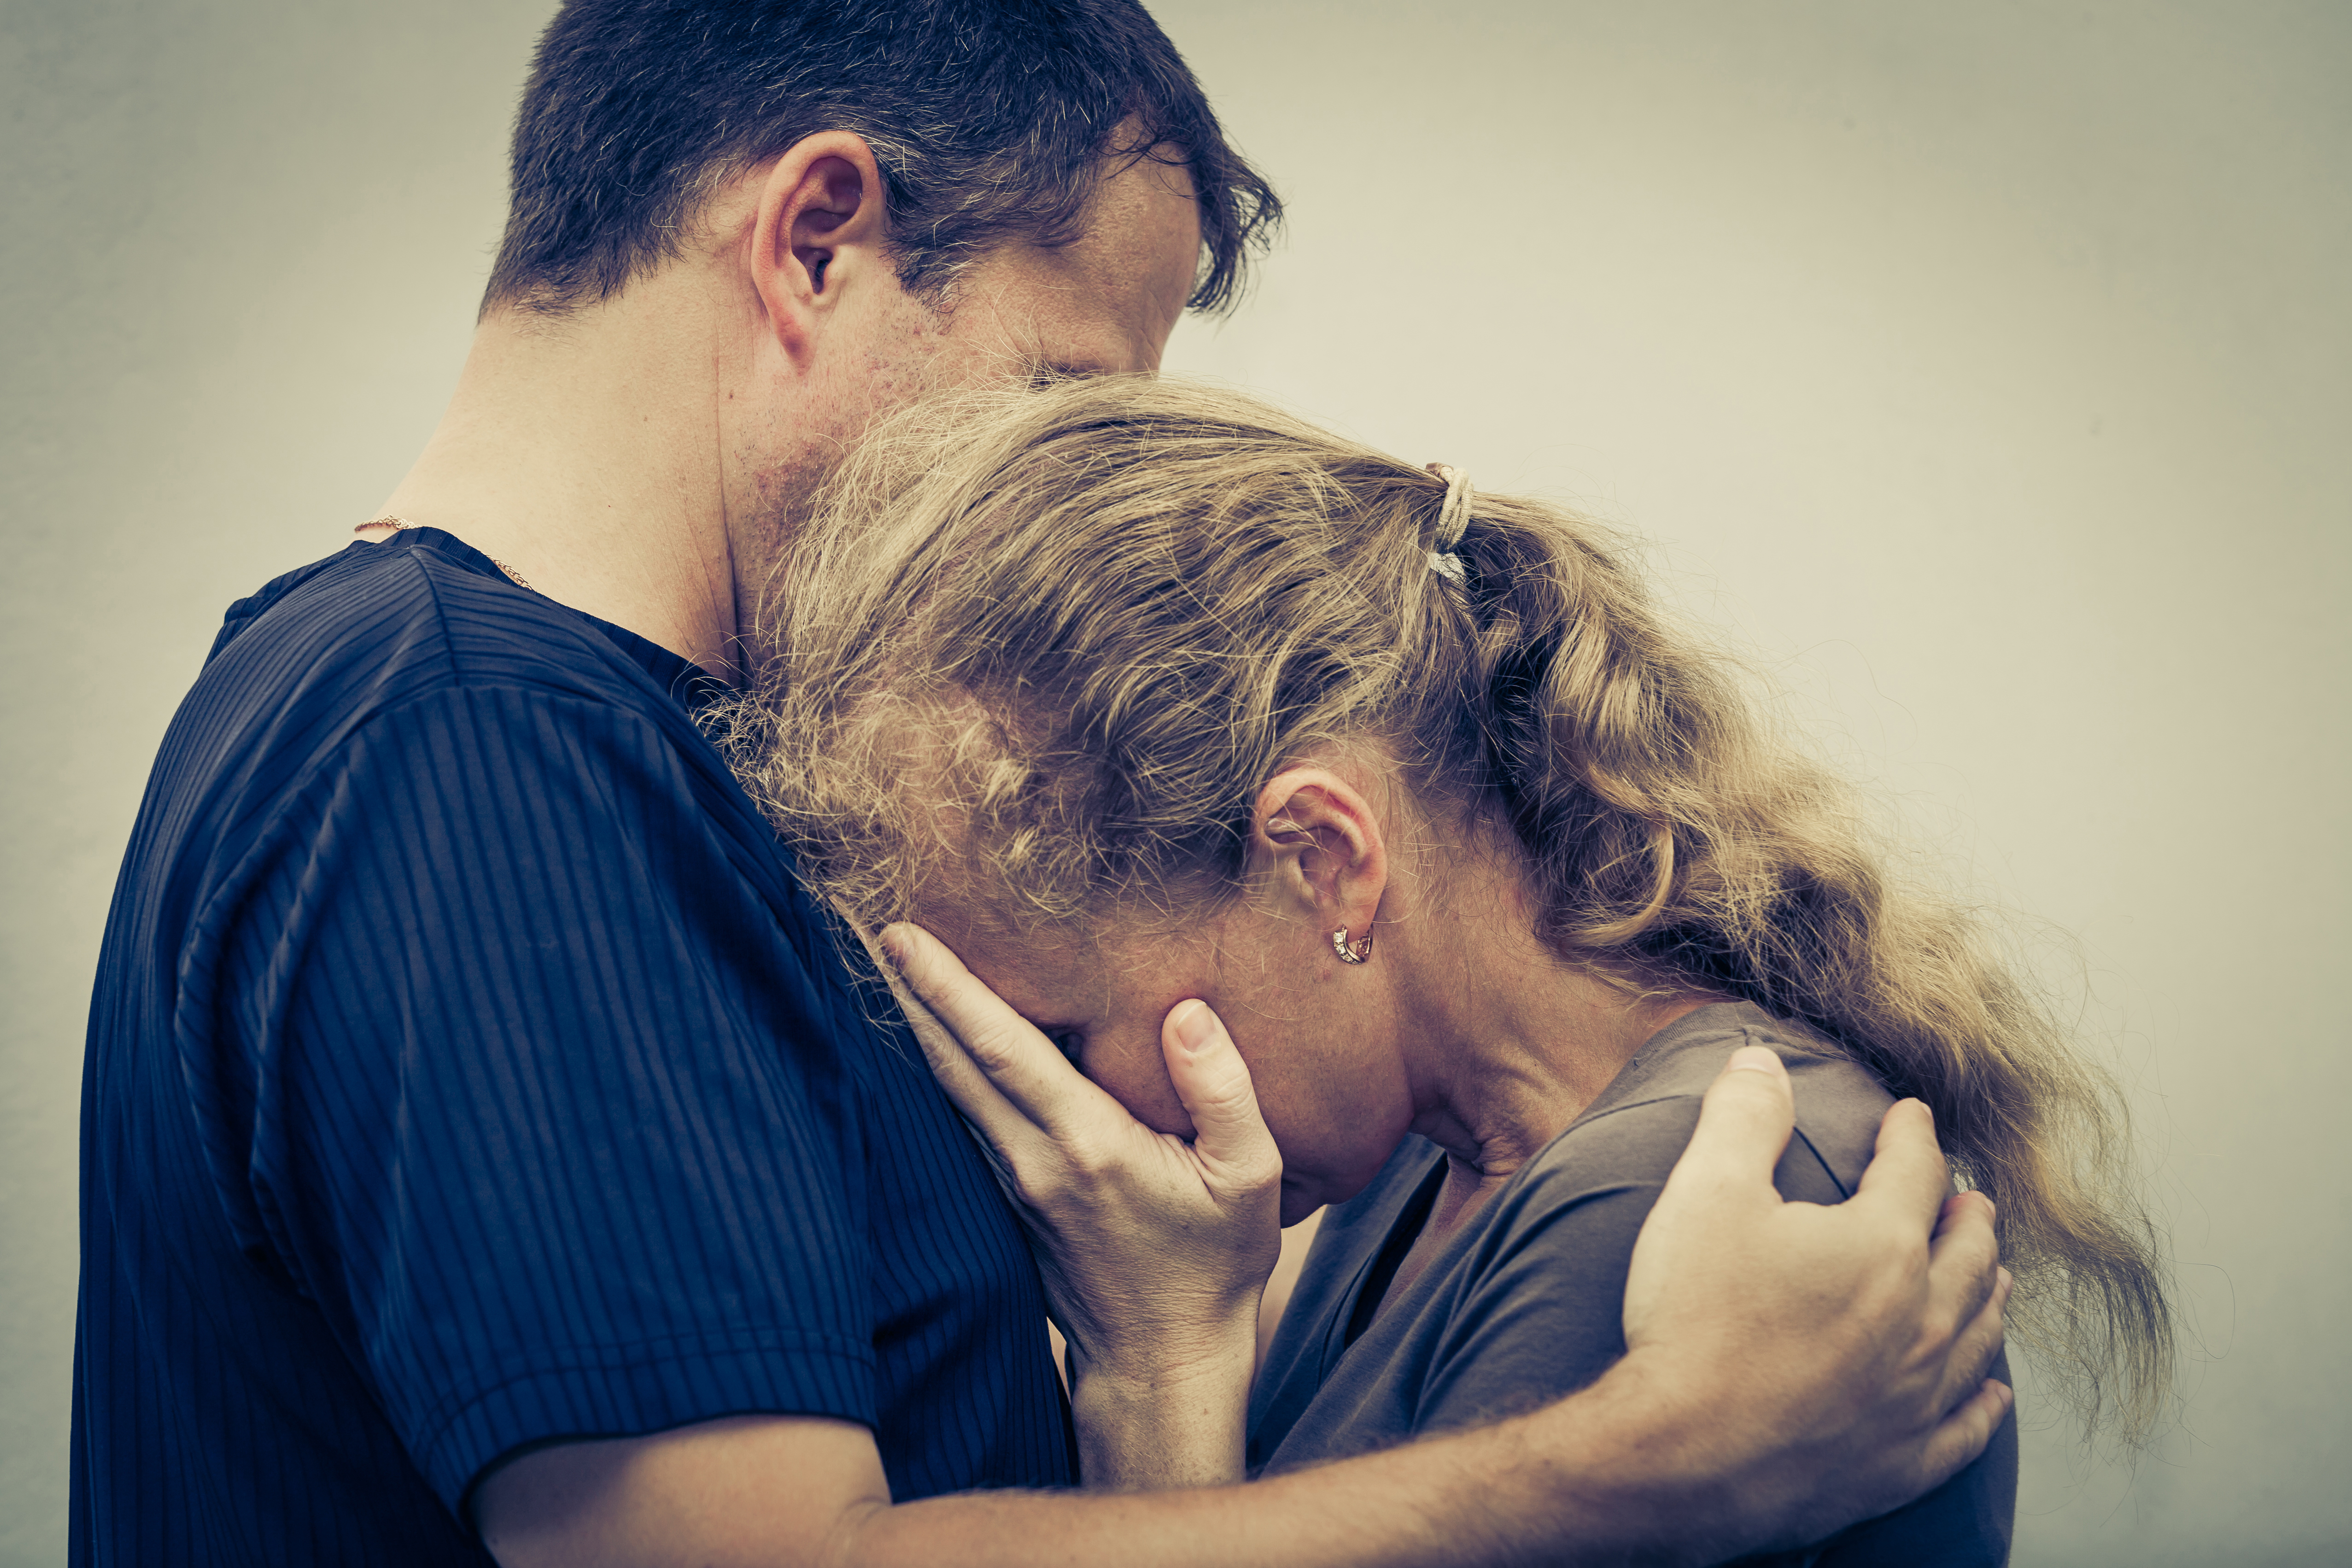 Un hombre intenta calmar a su esposa que llora | Fuente: Shutterstock.com